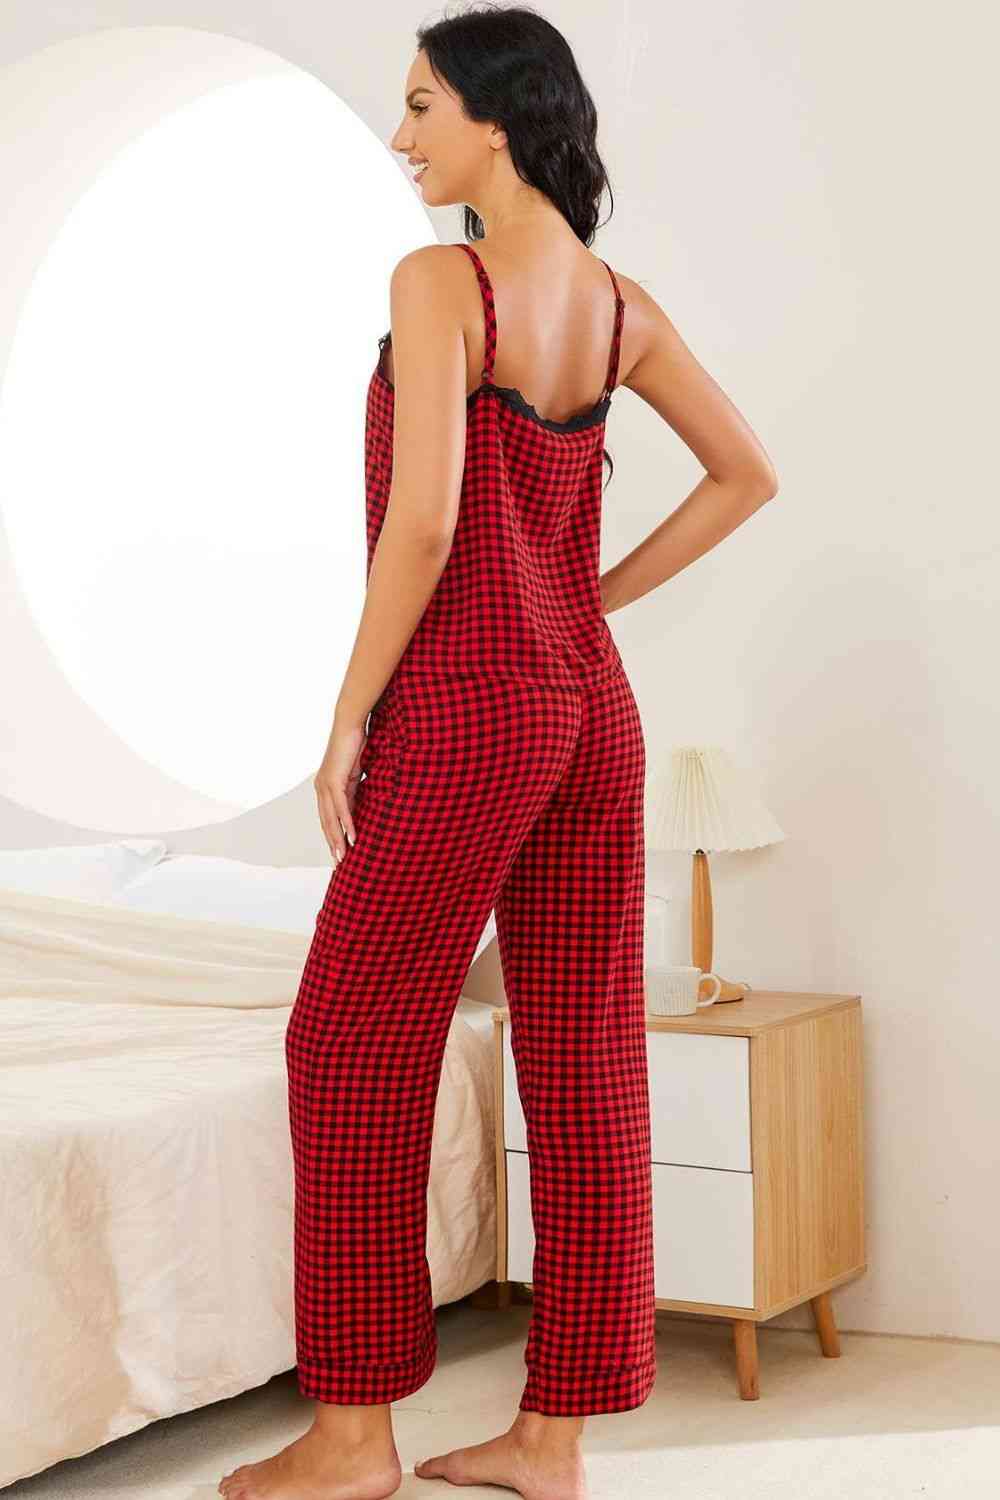 Plaid Lace Trim Cami and Drawstring Pants Pajama Set Loungewear Krazy Heart Designs Boutique   